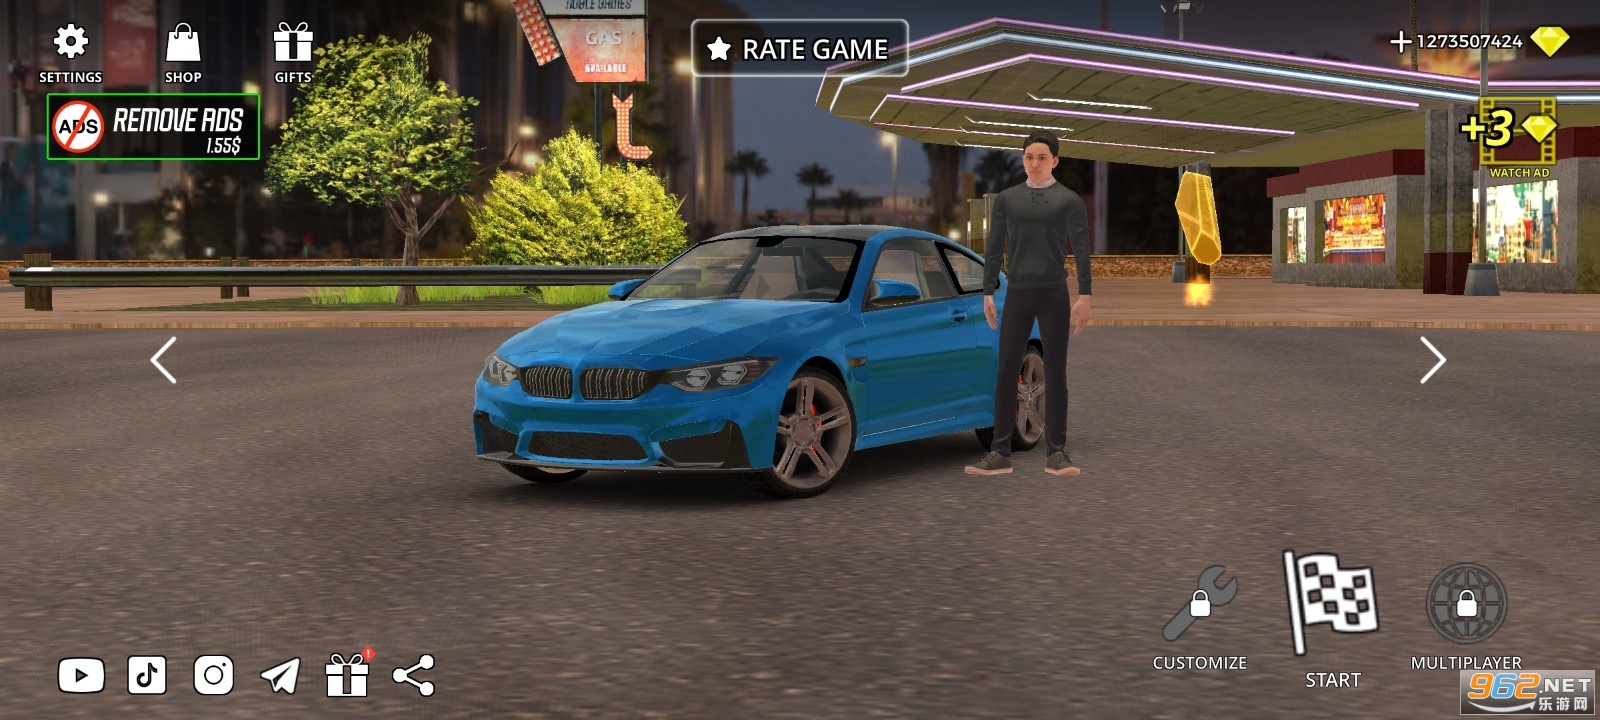 ͣϷ2°(Car Parking Multiplayer 2)